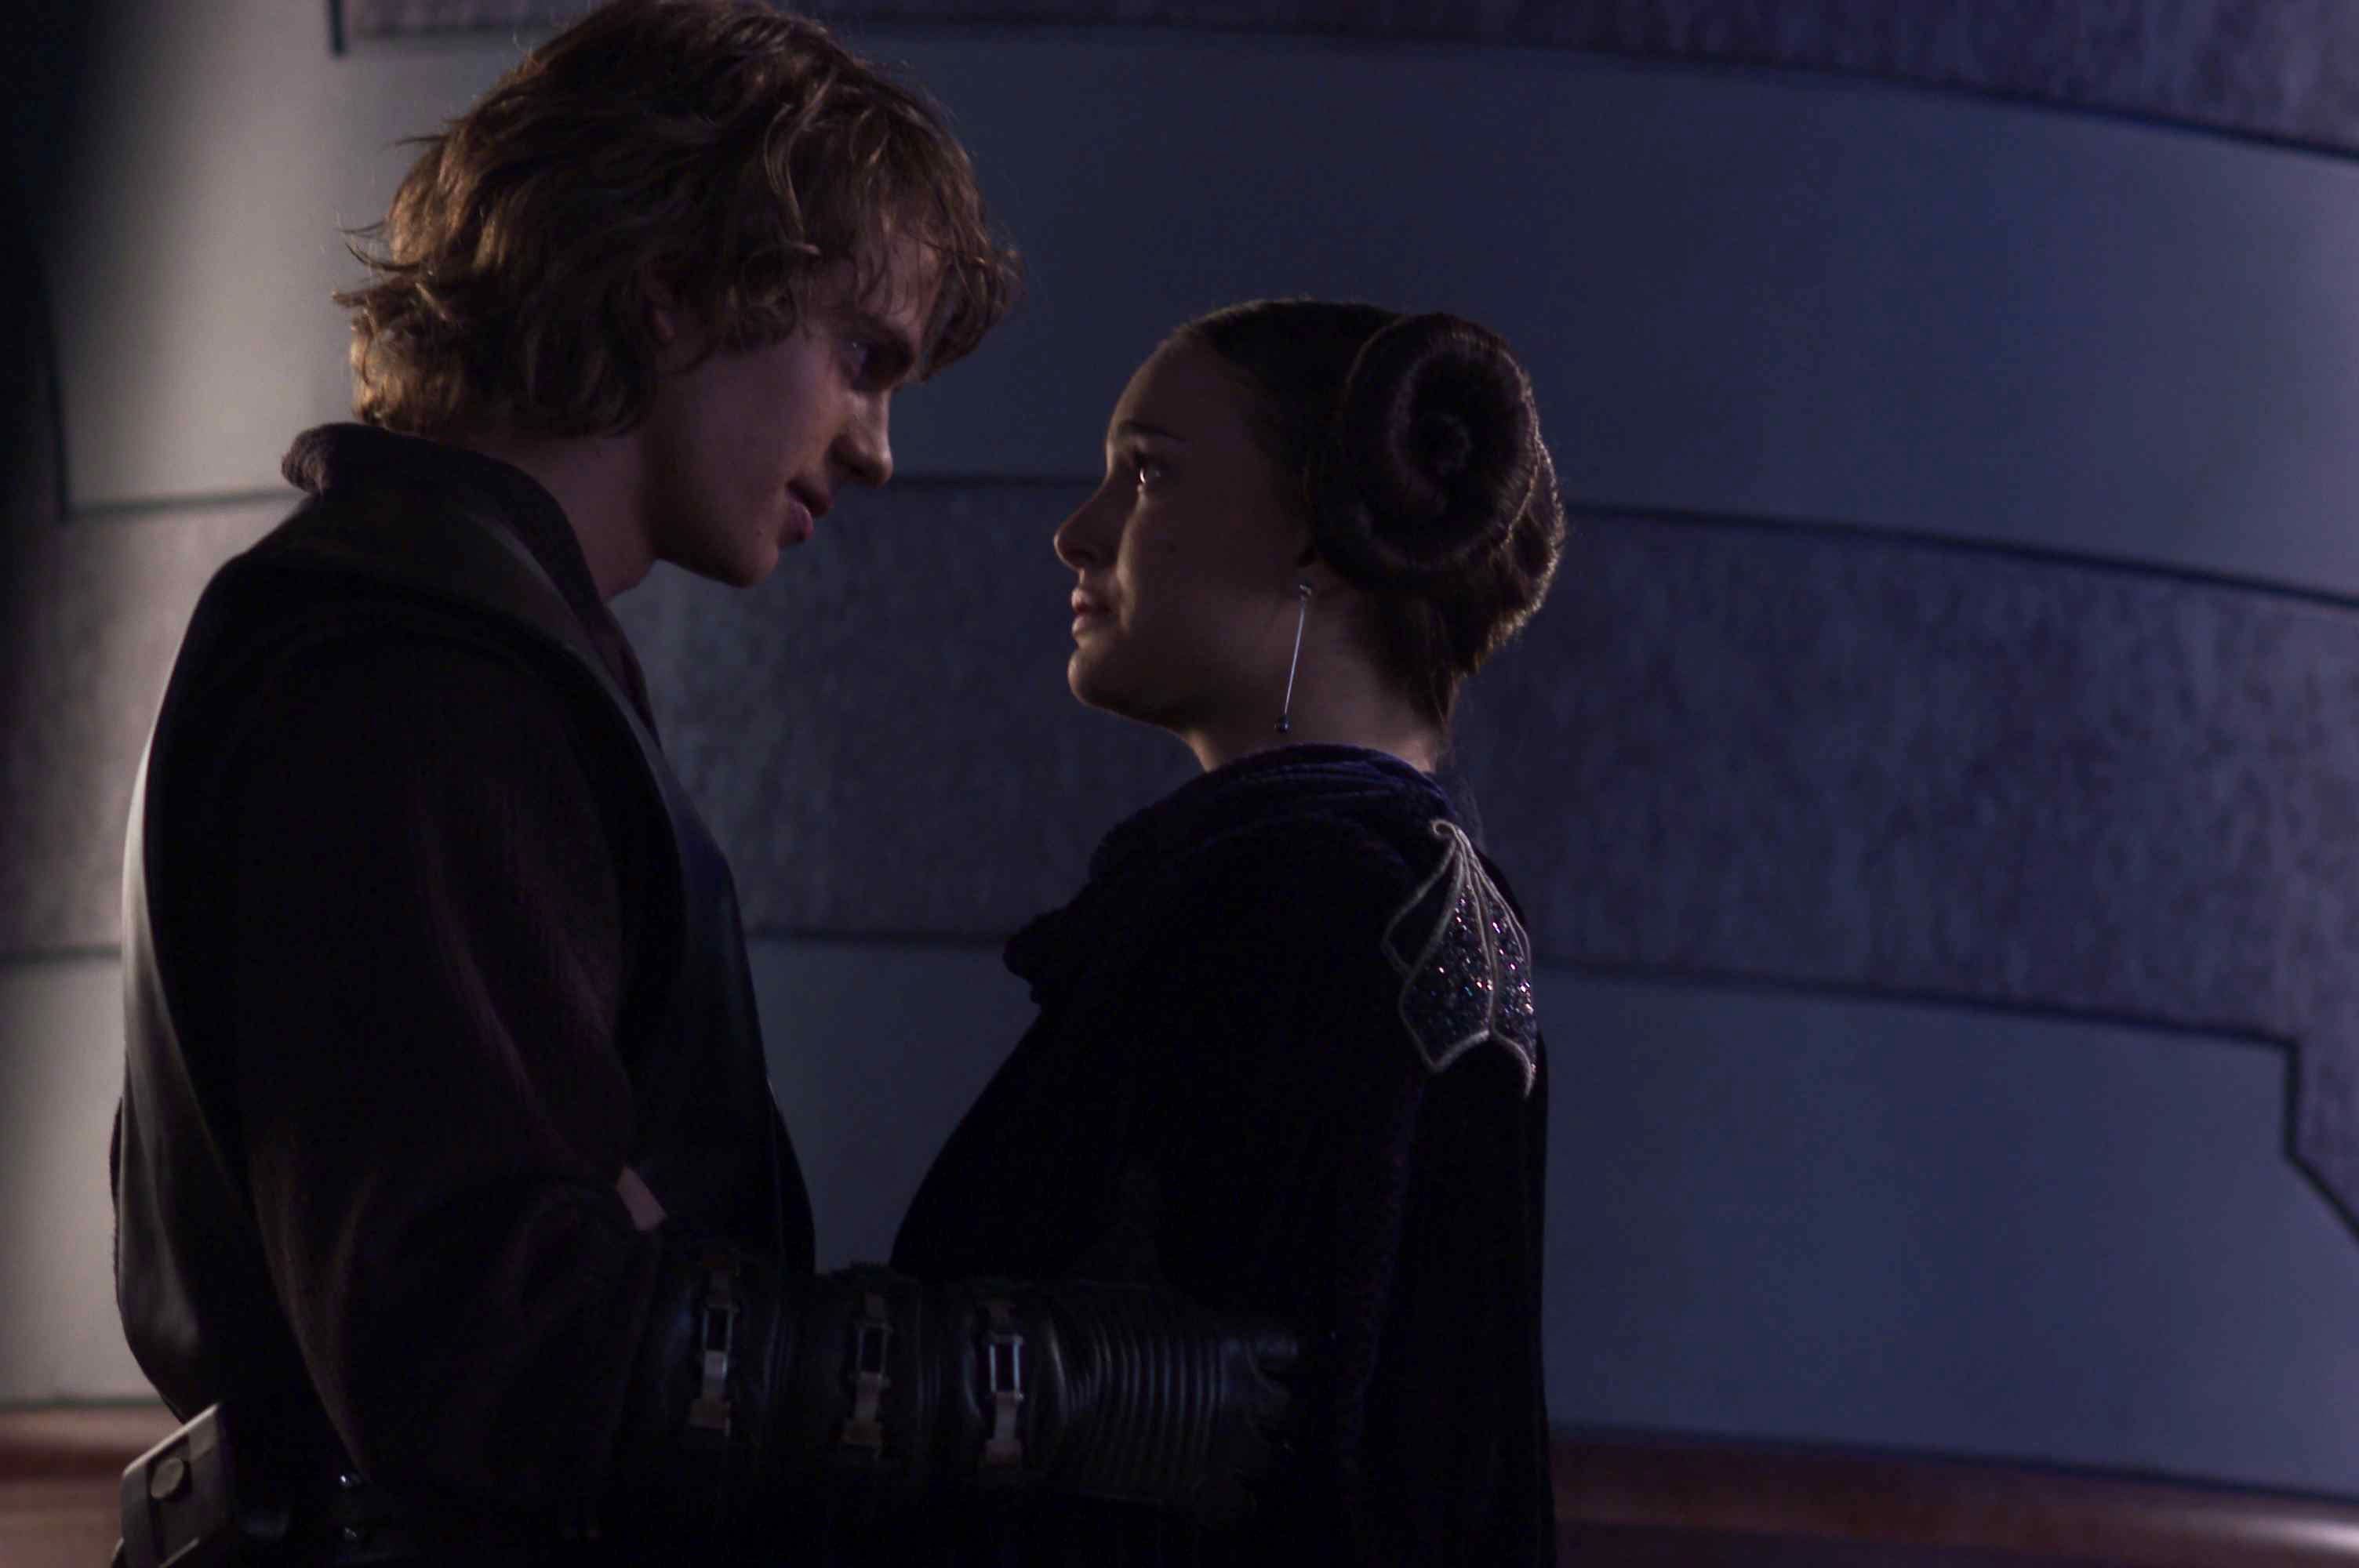 Anakin Skywalker (Hayden Christensen) and Queen Amidala (Natalie Portman) in Star Wars Episode III Revenge of the Sith (2005)